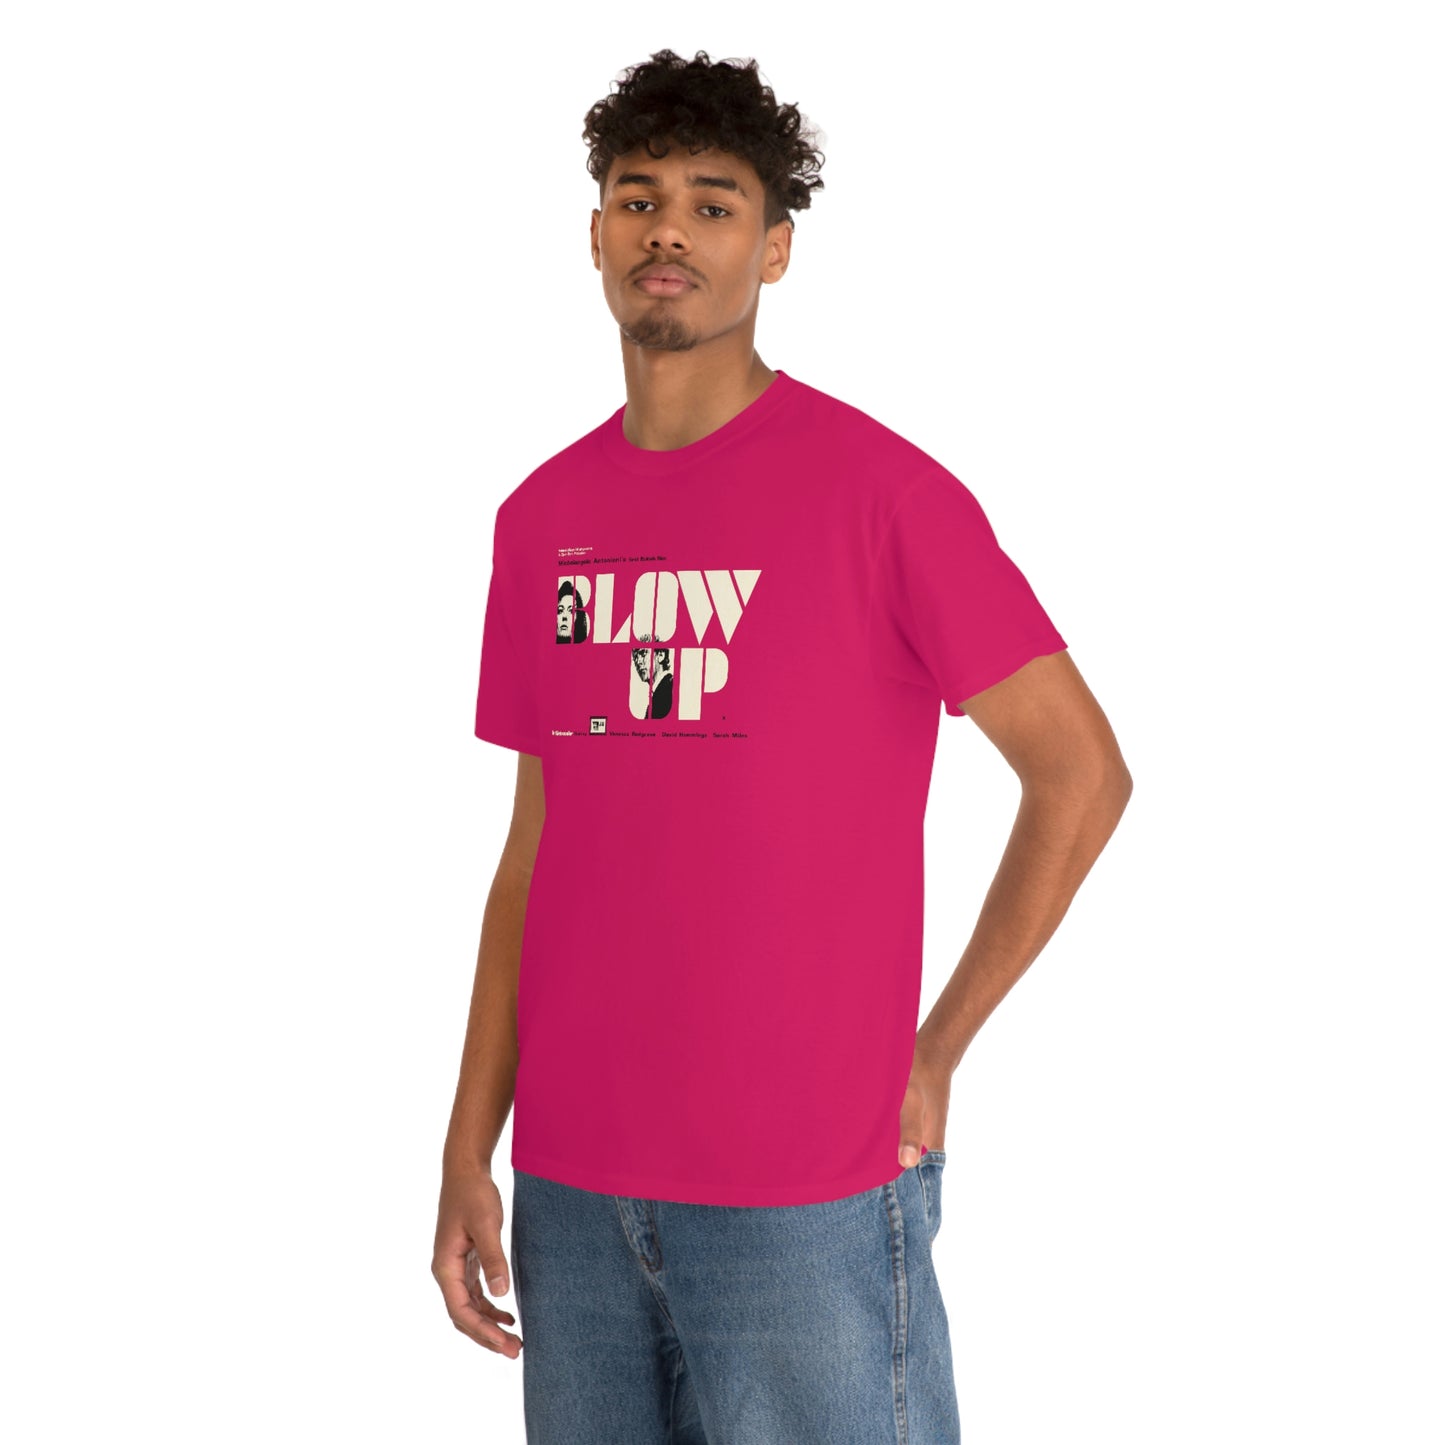 Blow-up T-Shirt